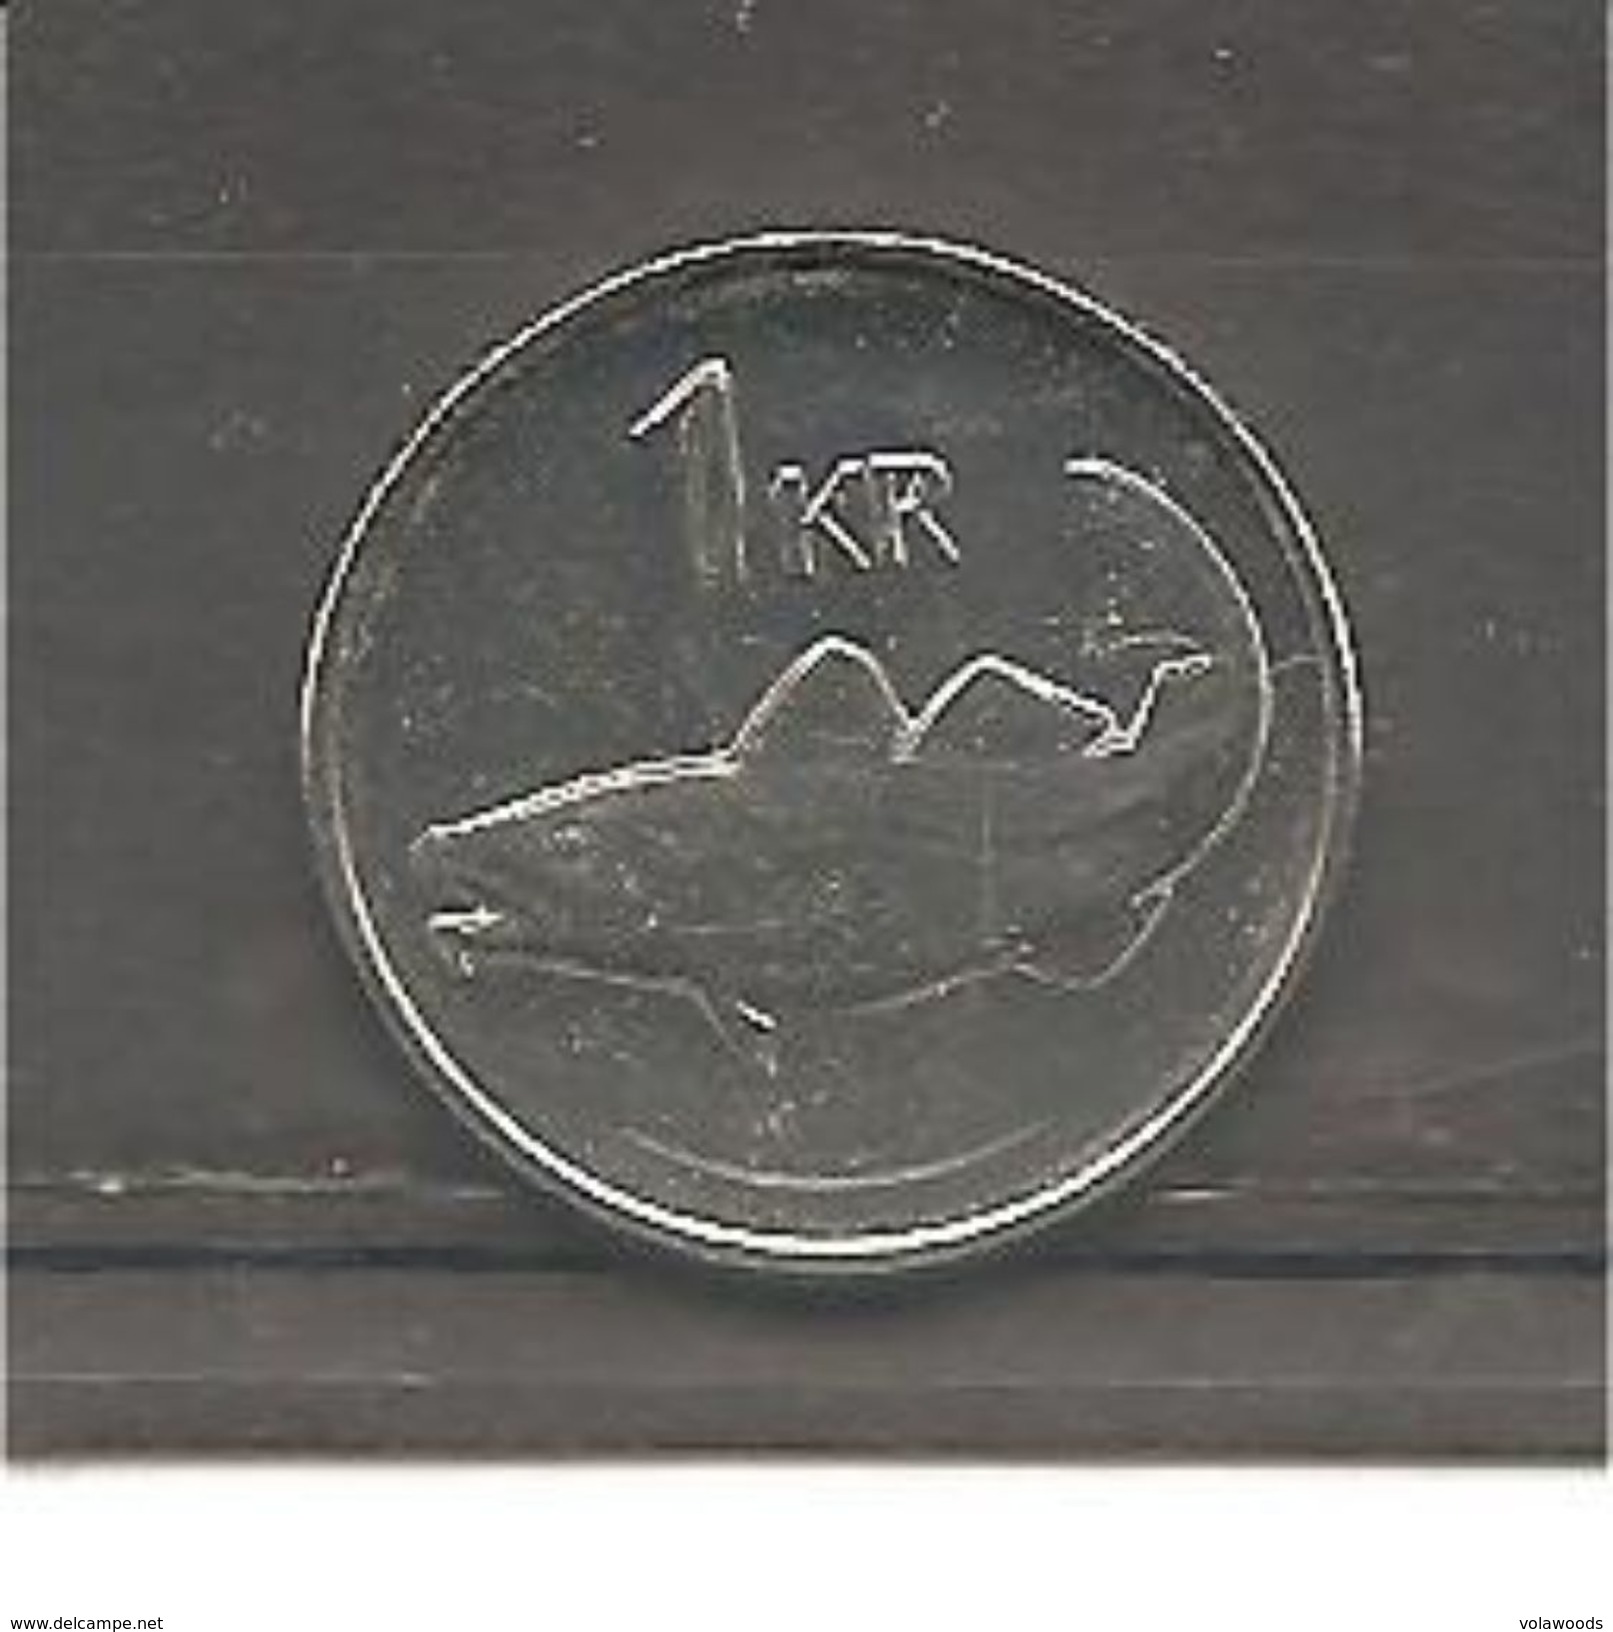 Islanda - Moneta Circolata Da 1 Corona - 2011 - Islande